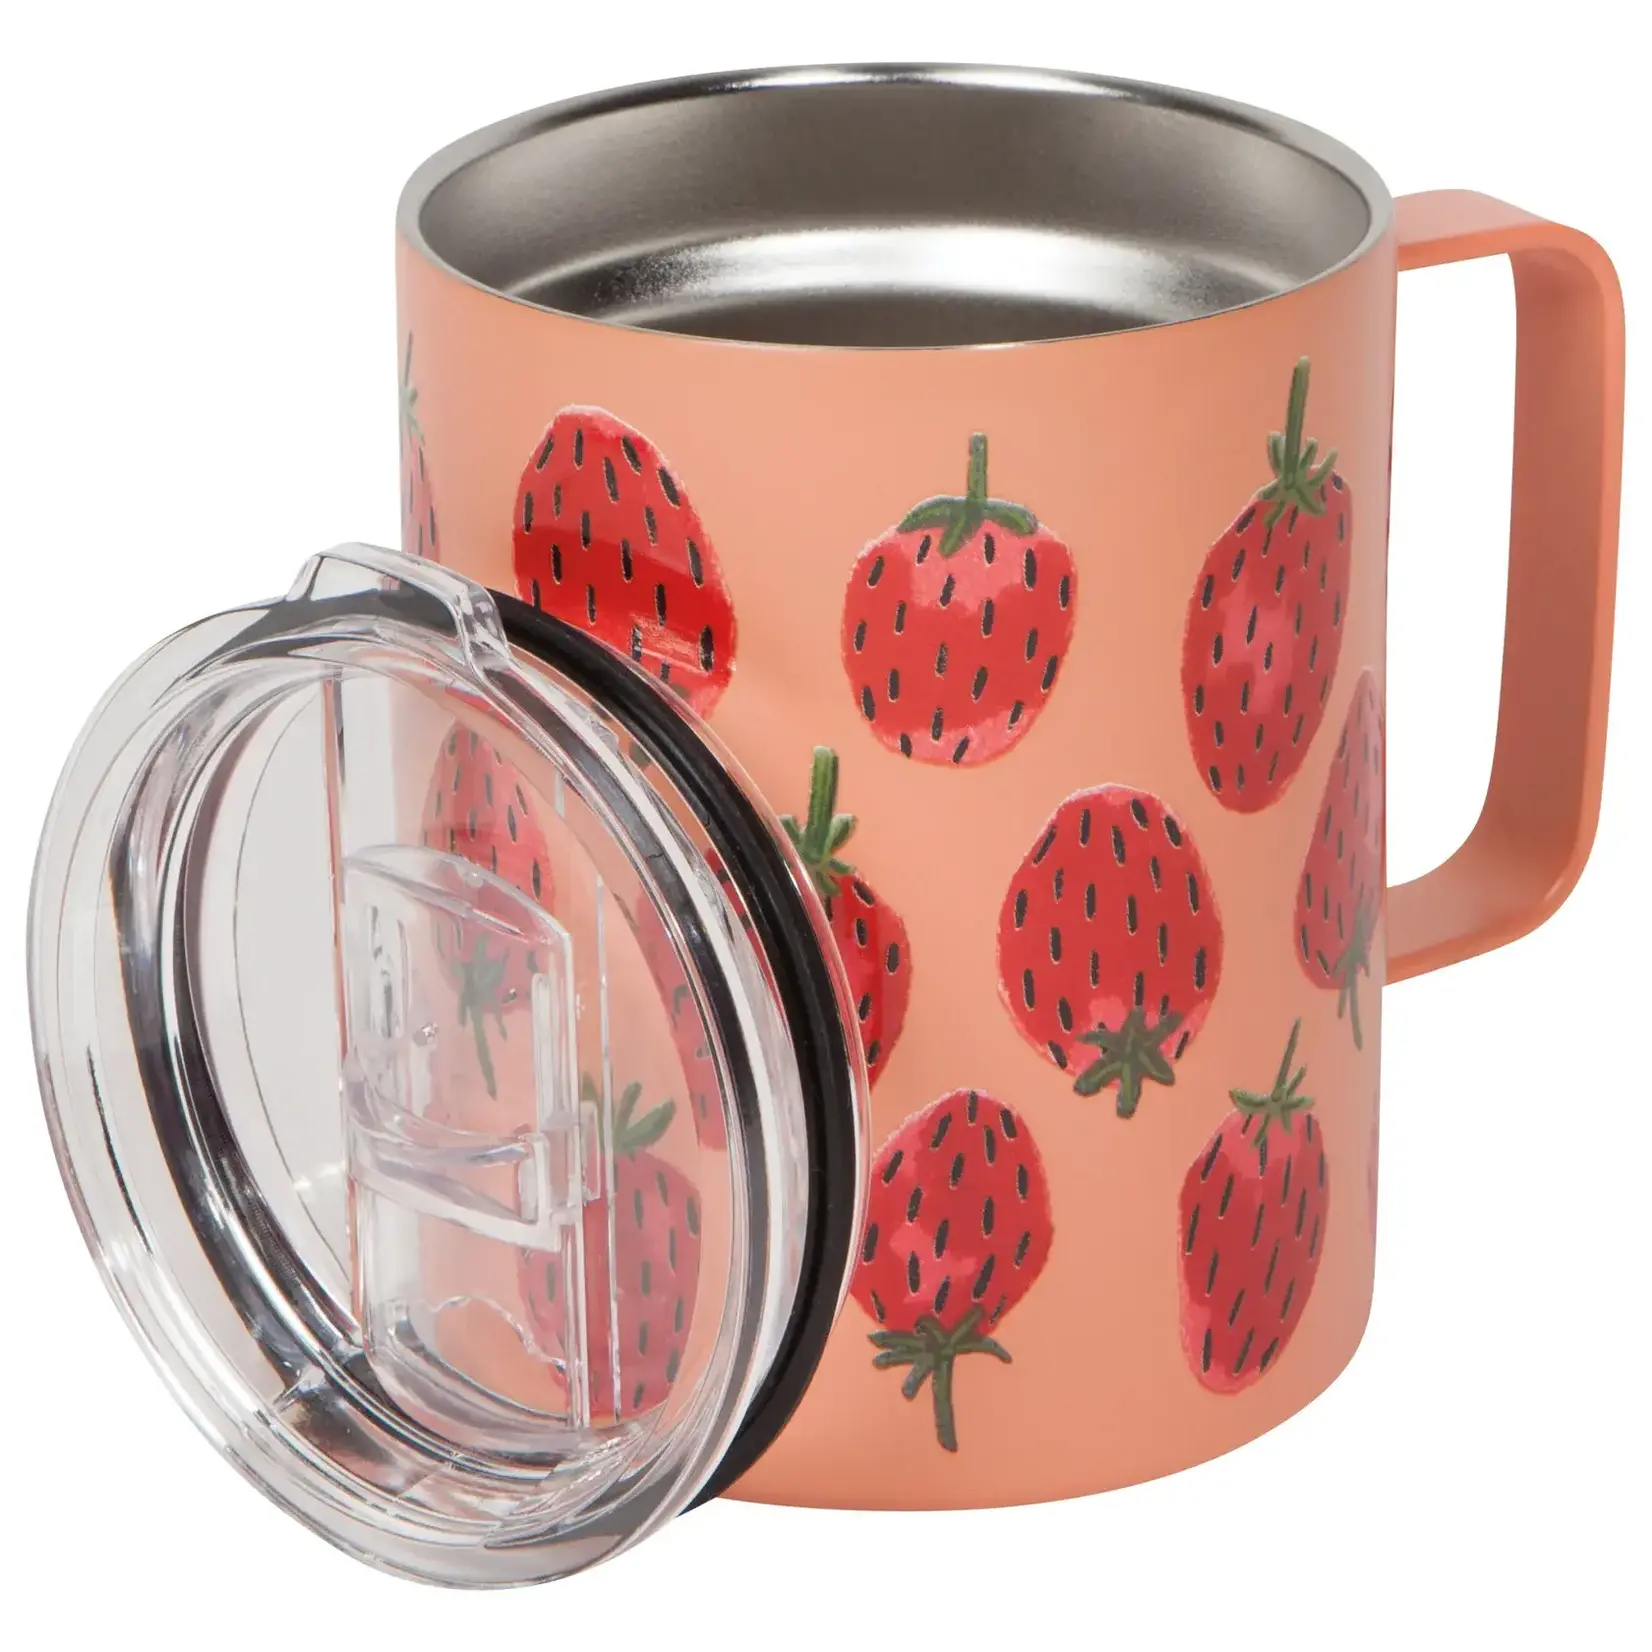 Berry Sweet Insulated Travel Mug